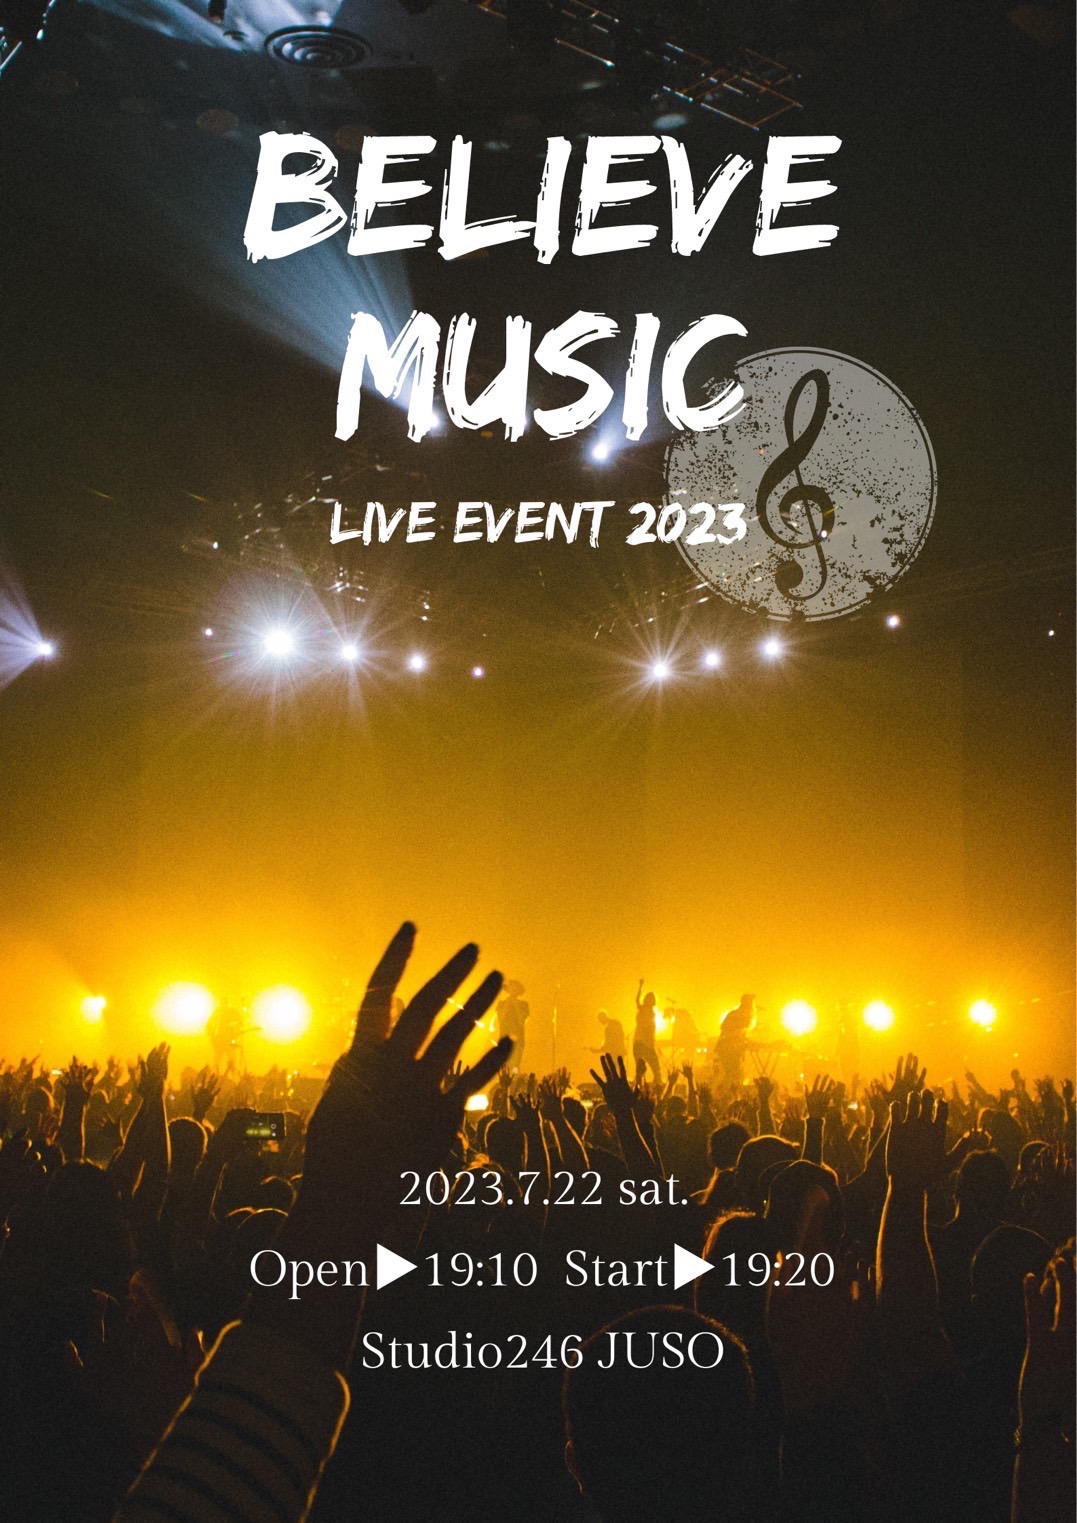 Believe Music LIVE EVENT 2023 参加します🎸